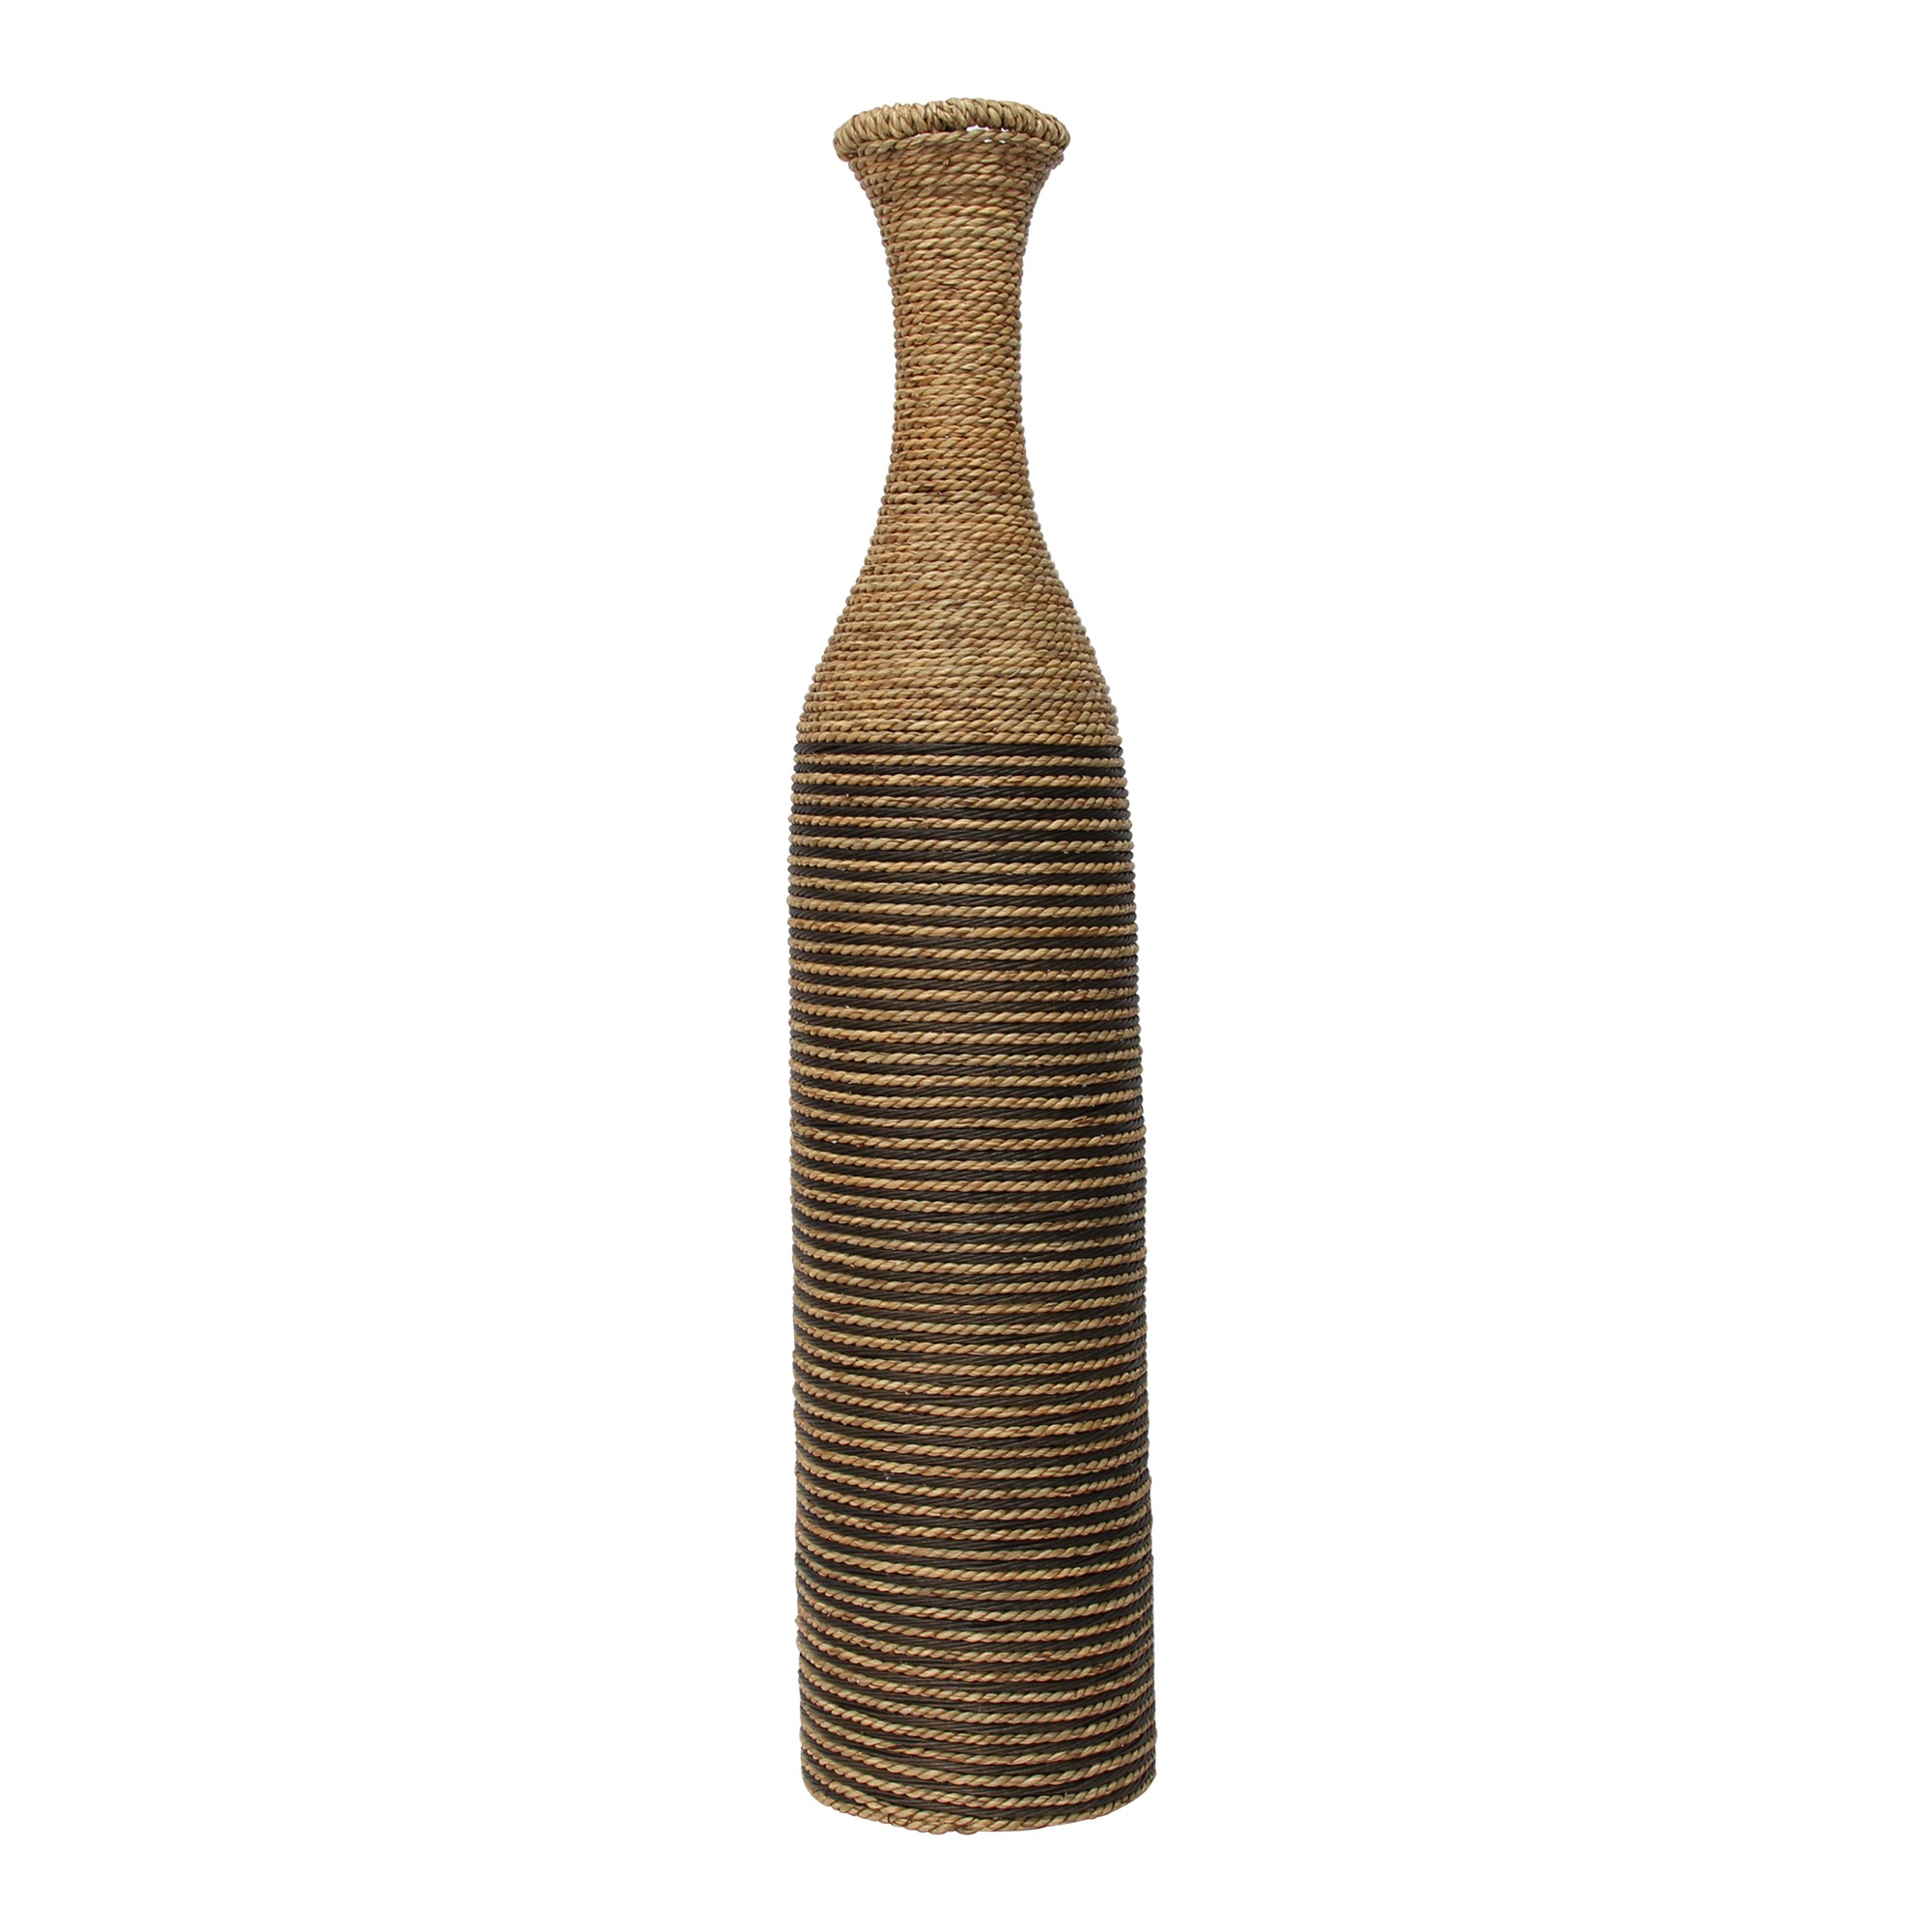 36"H Two-Tone Woven Rattan Floor Vase